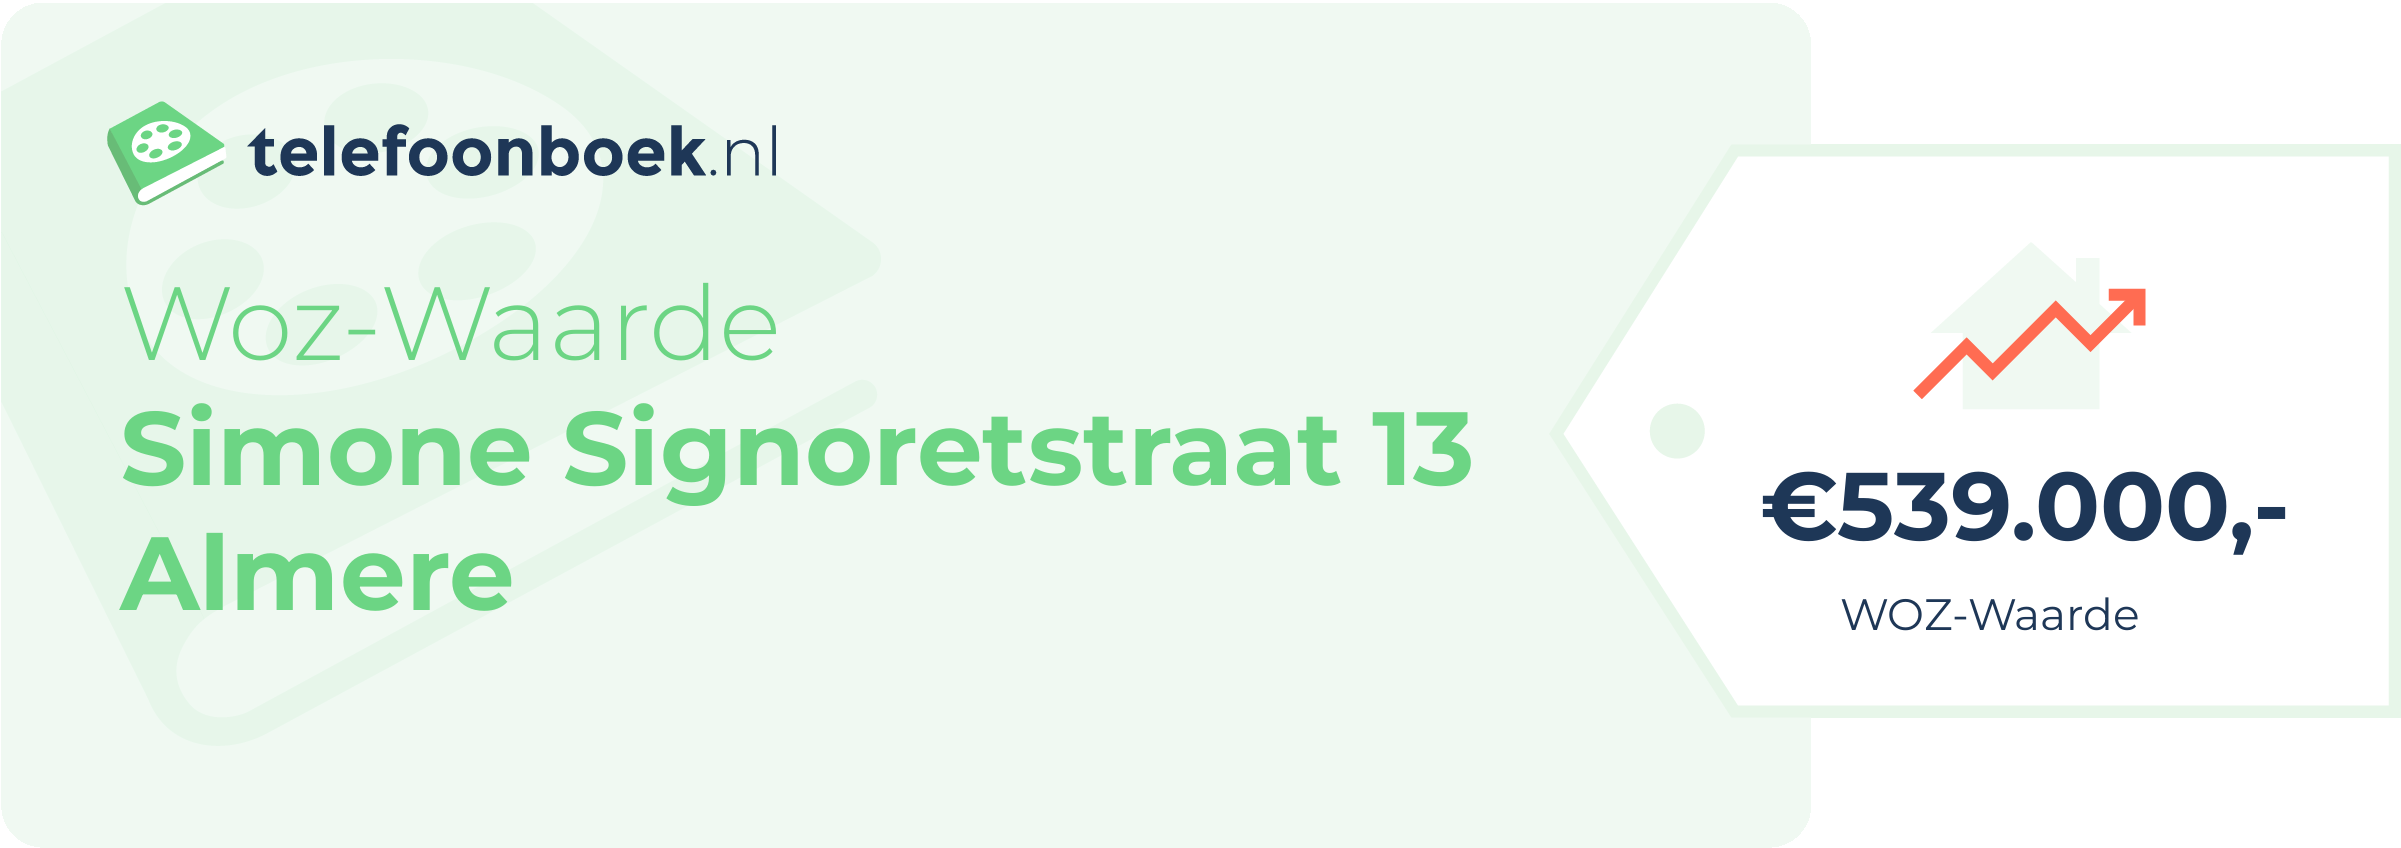 WOZ-waarde Simone Signoretstraat 13 Almere